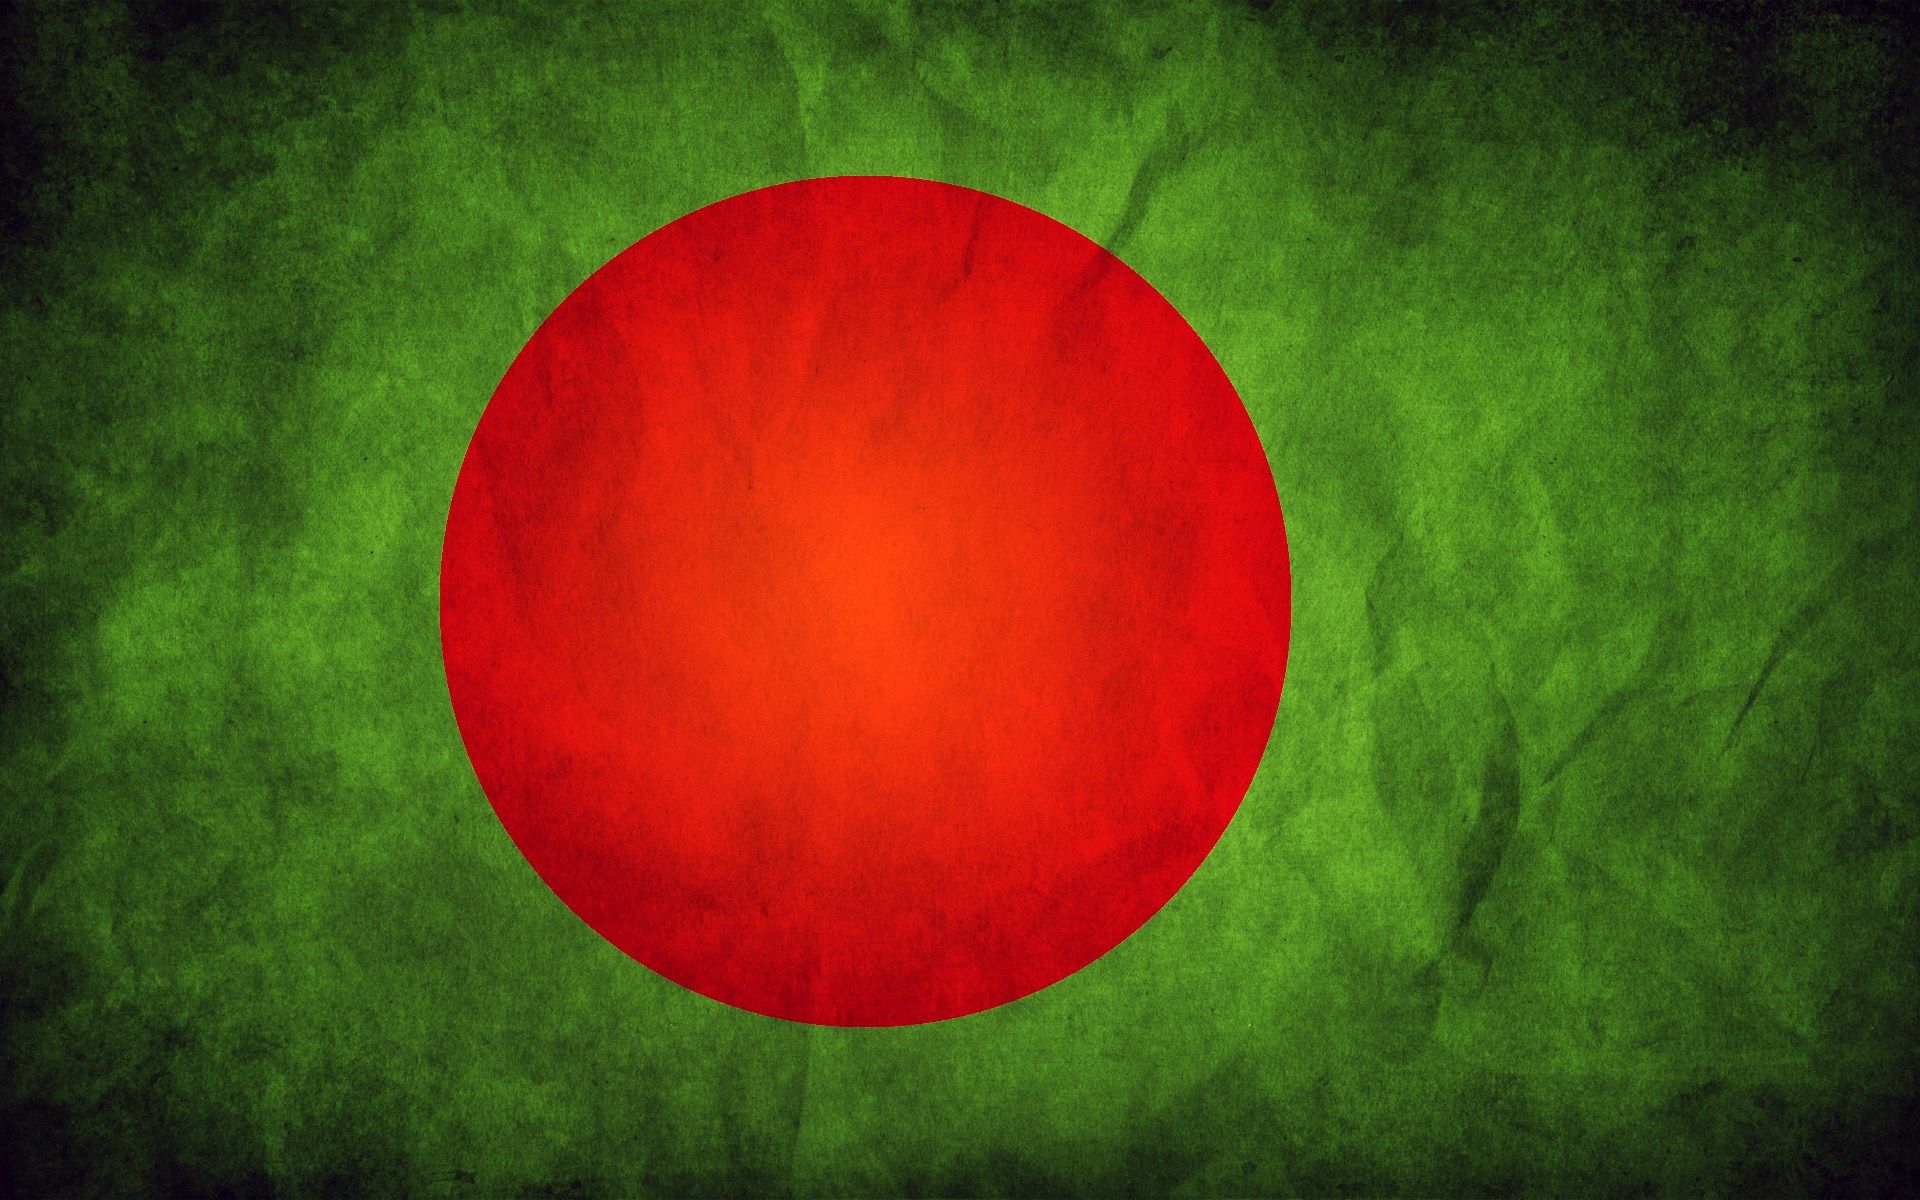 Free Download Bangladesh Wallpaper in High Def: What lies